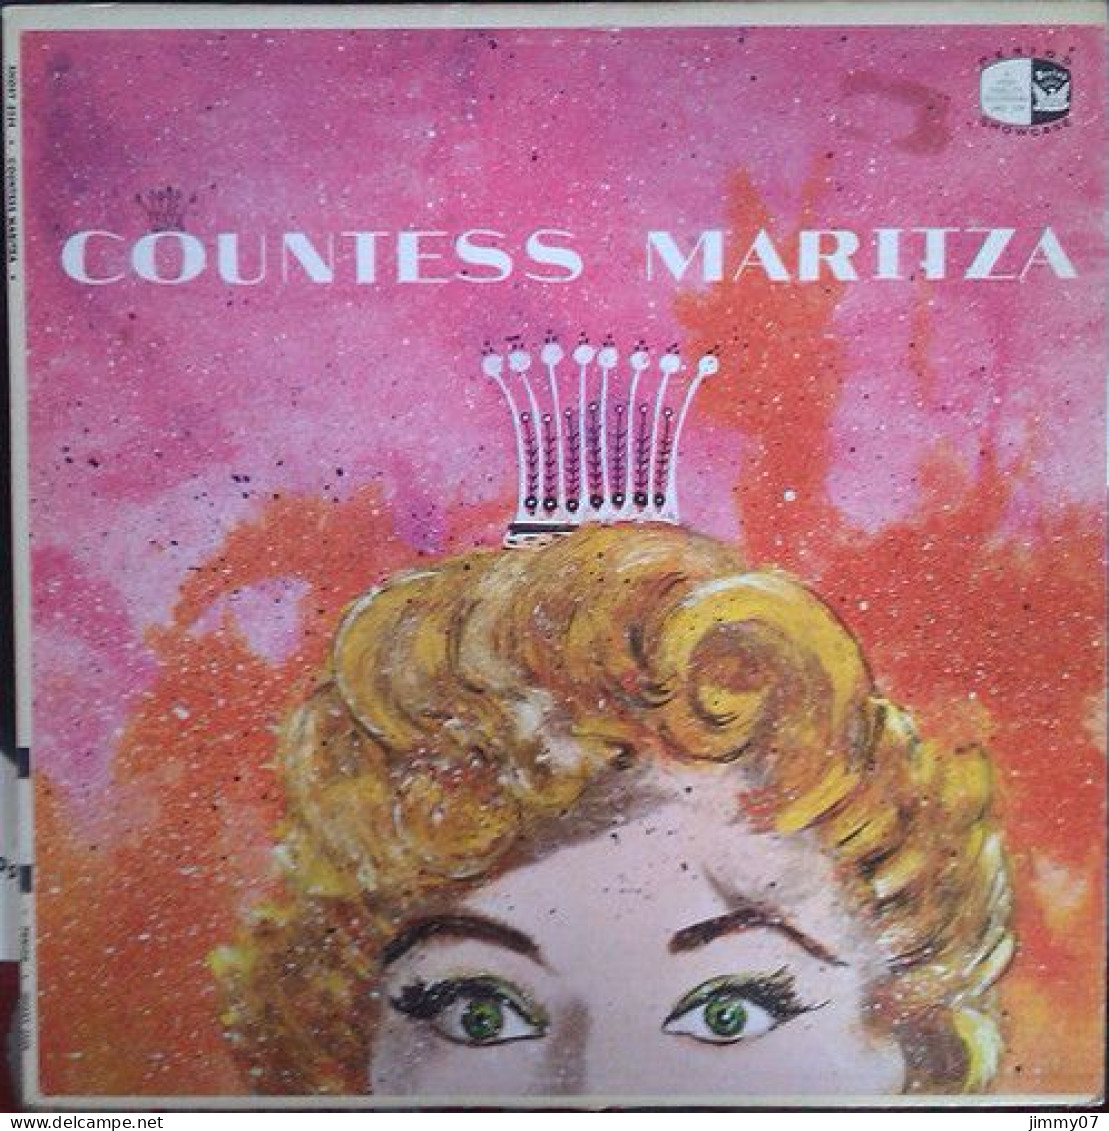 Emmerich Kalman - "Countess Maritza" (LP) - Klassiekers